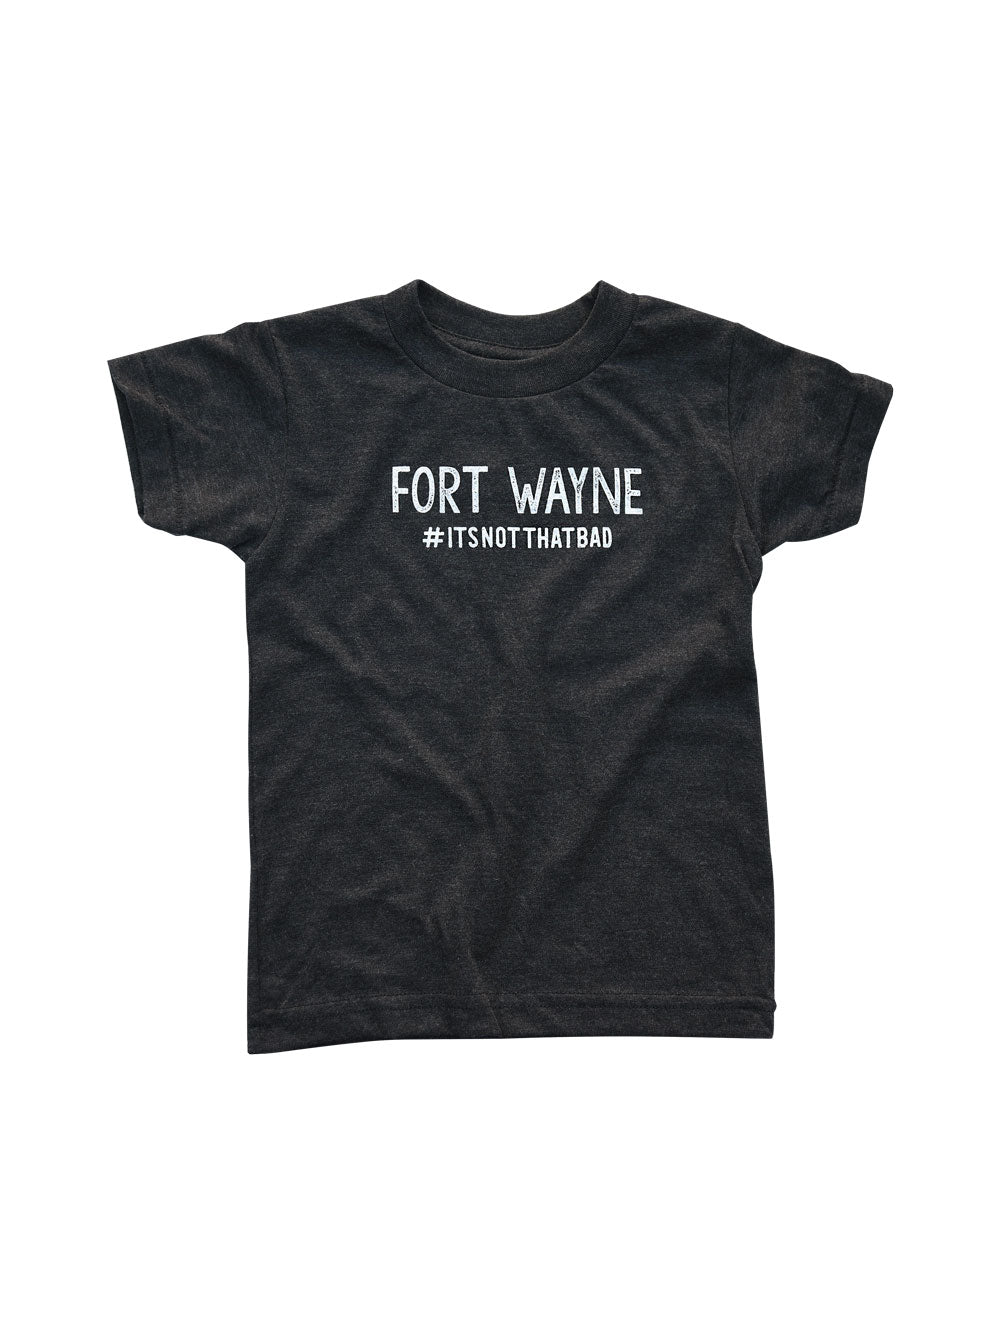 Fort Wayne #itsnotthatbad black heather kids t-shirt